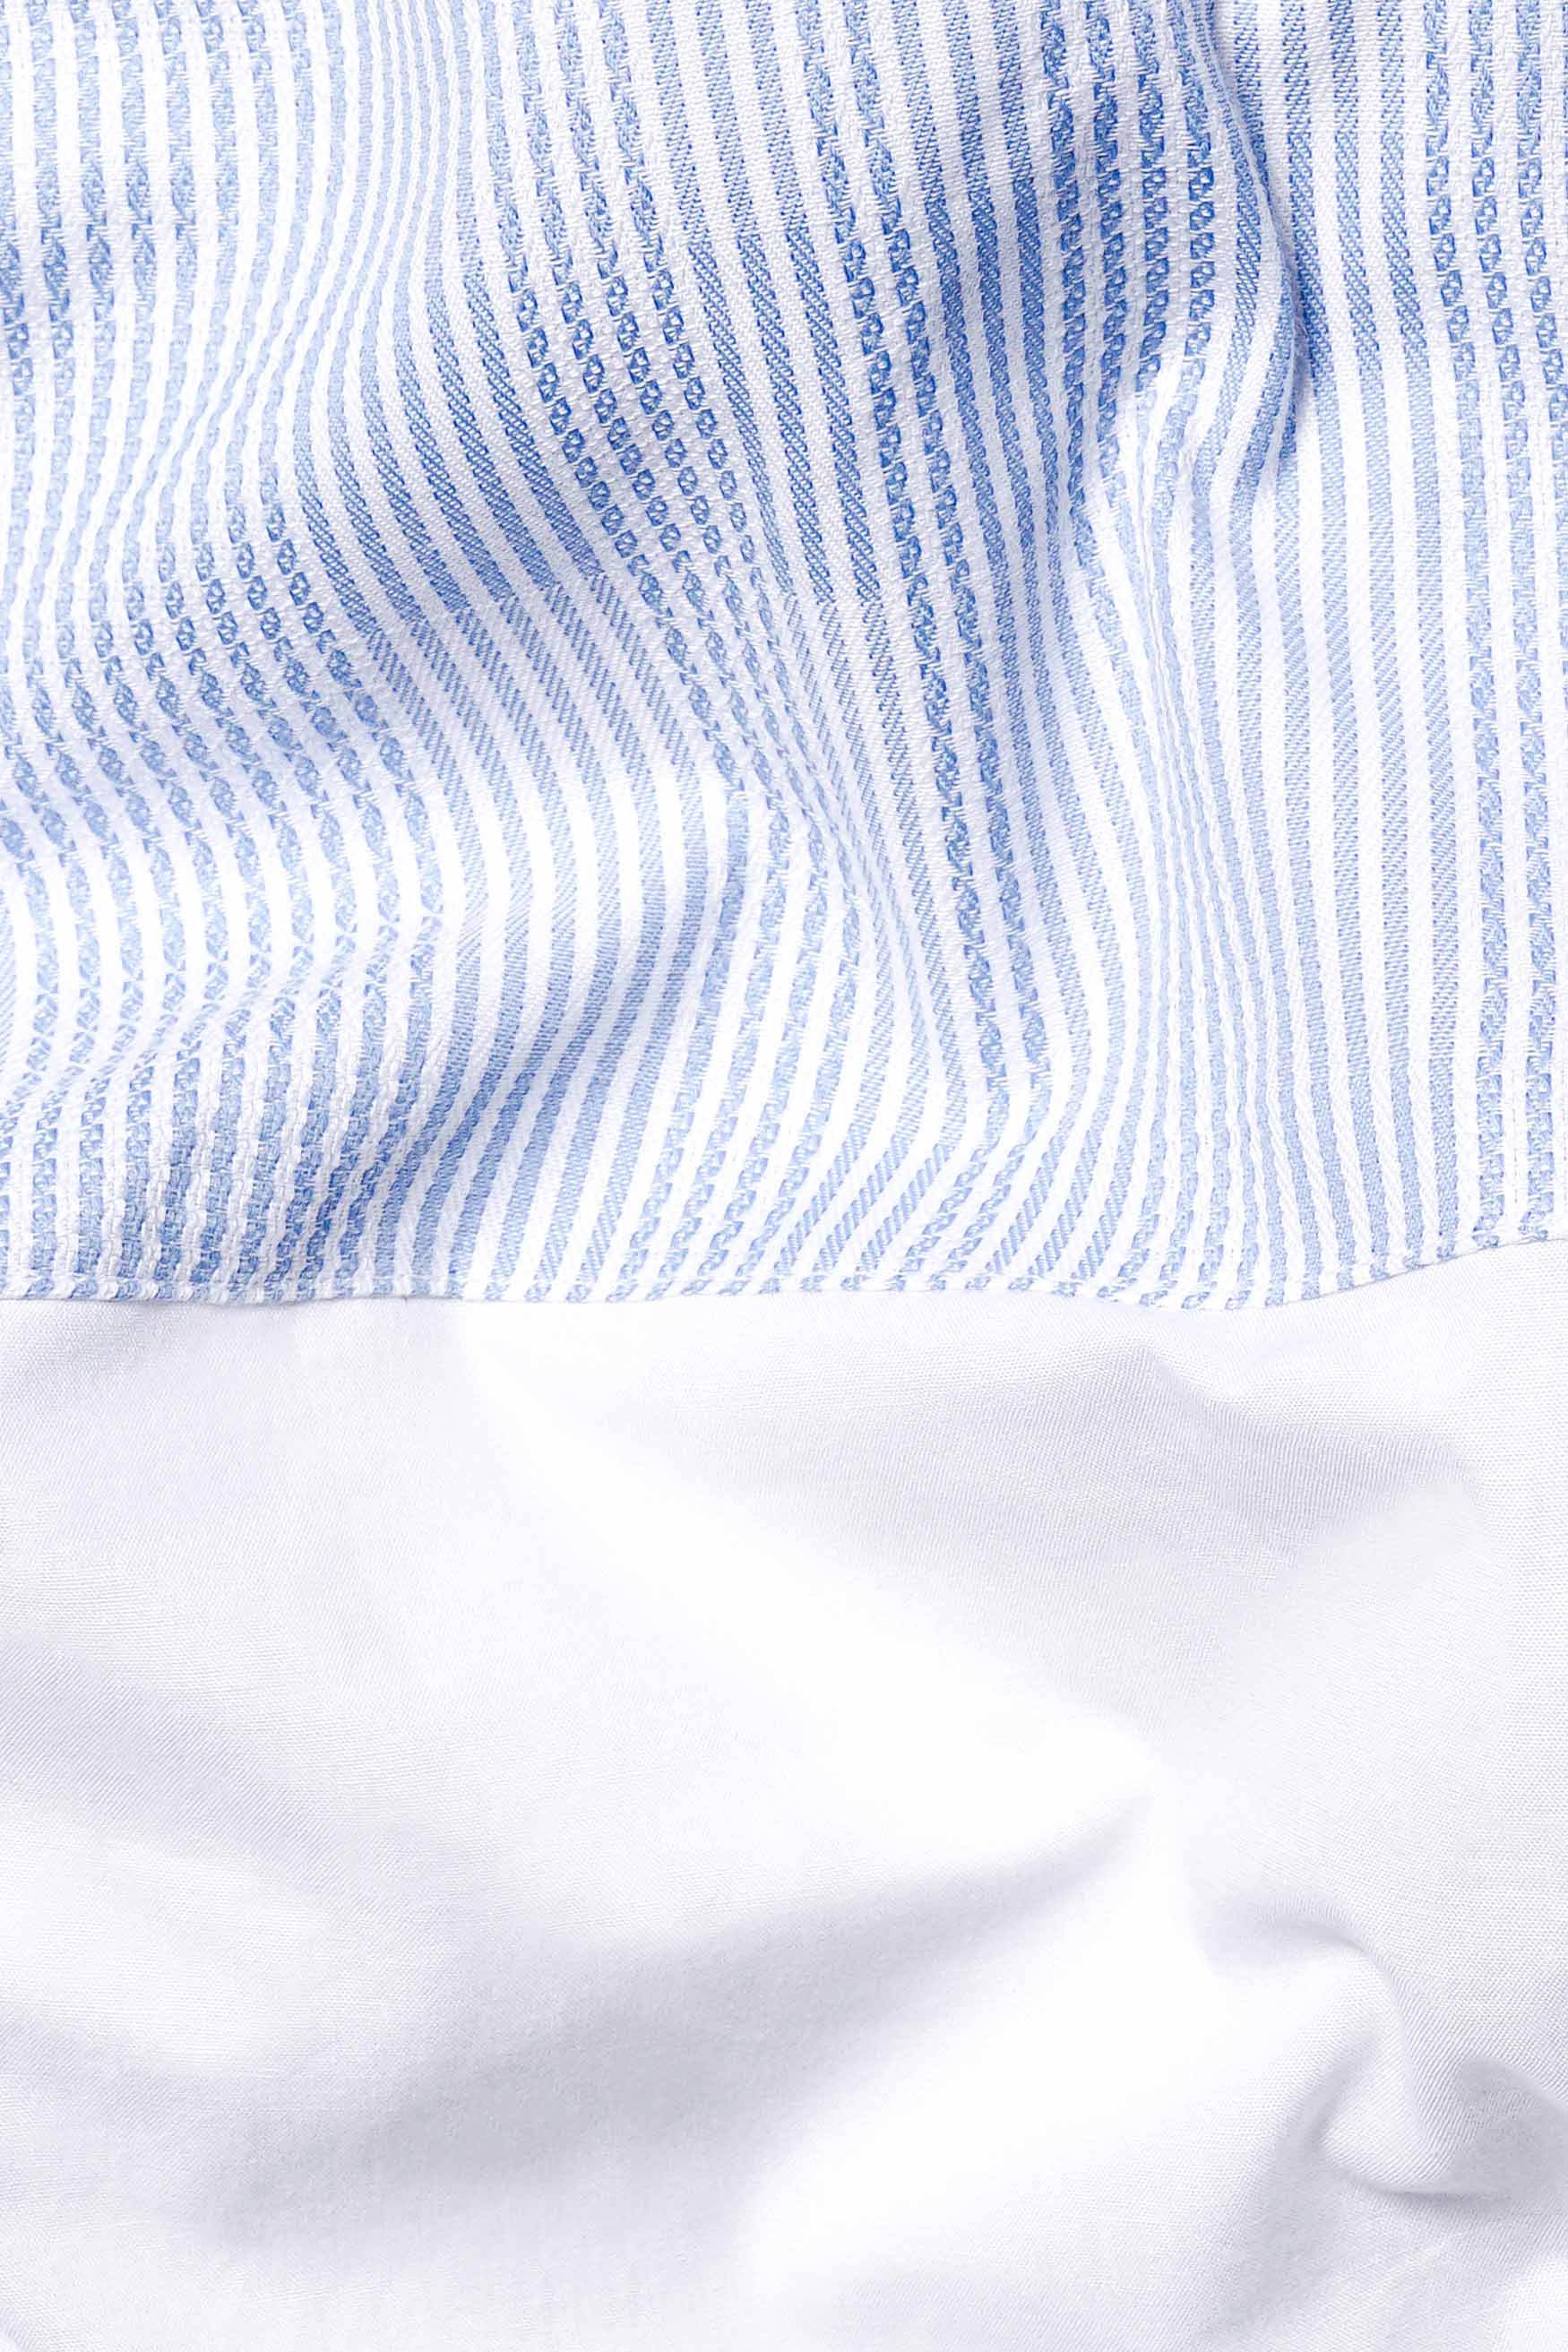 Chetwode Blue Striped and Bright White Striped Premium Cotton Designer Shirt 11398-P134-38, 11398-P134-H-38, 11398-P134-39, 11398-P134-H-39, 11398-P134-40, 11398-P134-H-40, 11398-P134-42, 11398-P134-H-42, 11398-P134-44, 11398-P134-H-44, 11398-P134-46, 11398-P134-H-46, 11398-P134-48, 11398-P134-H-48, 11398-P134-50, 11398-P134-H-50, 11398-P134-52, 11398-P134-H-52